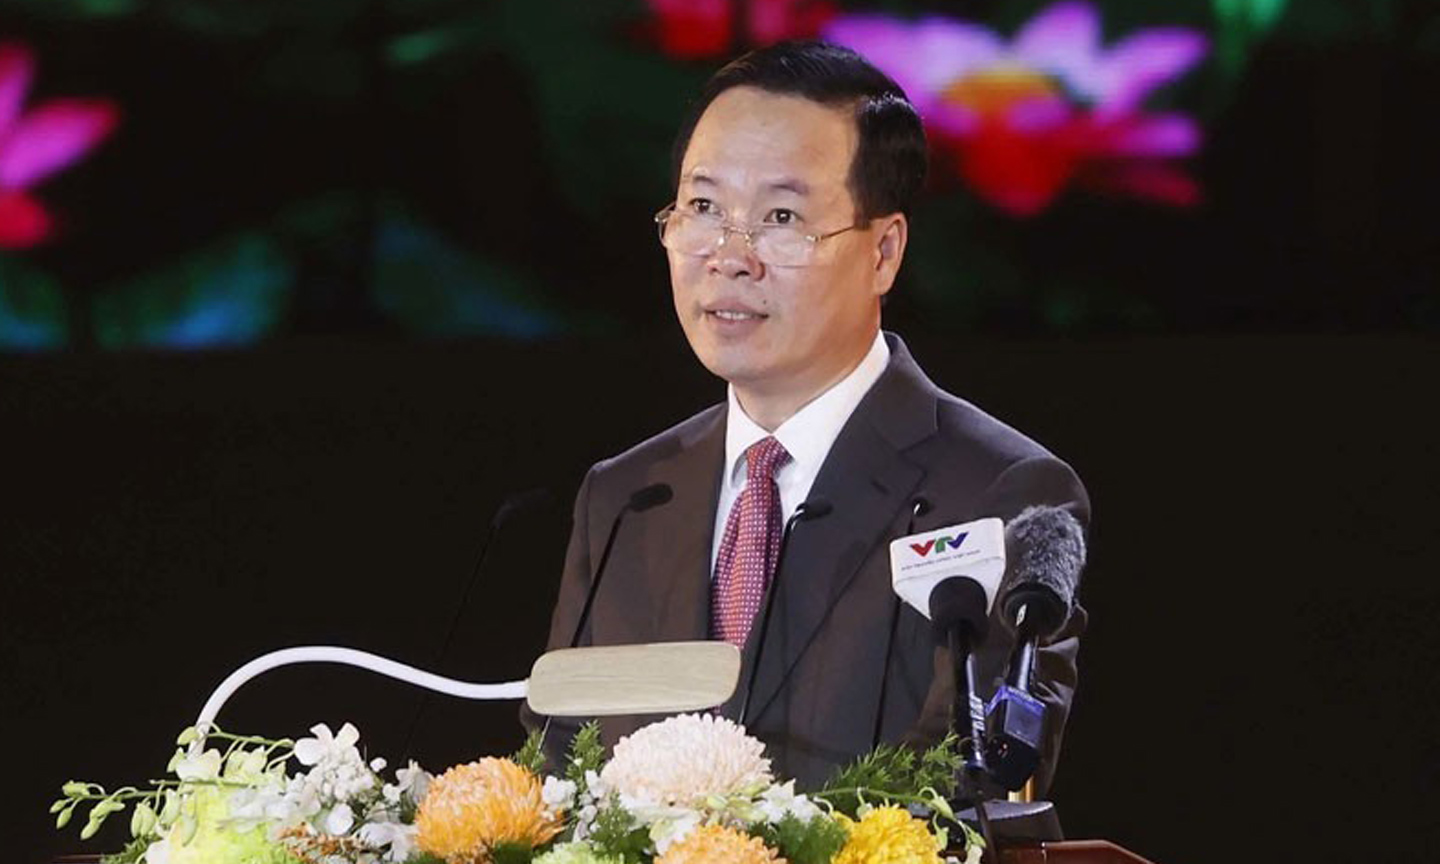 President Vo Van Thuong speaks at the event.